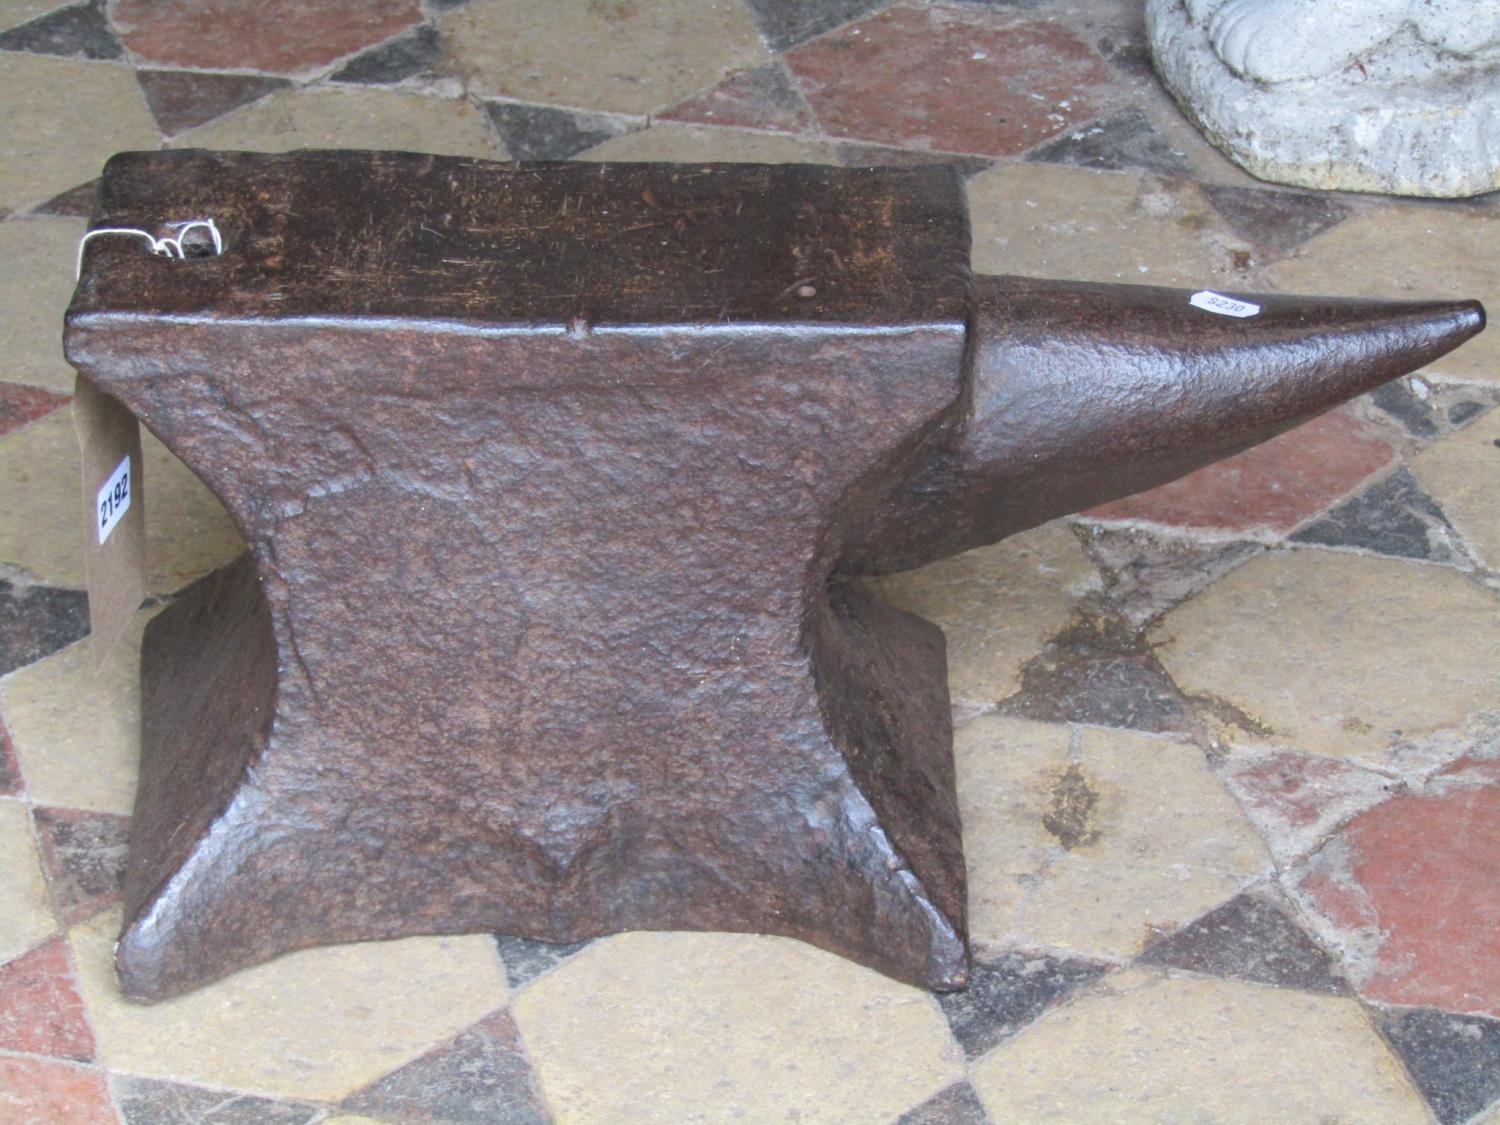 An old cast iron anvil, 50 cm long x 25 cm high